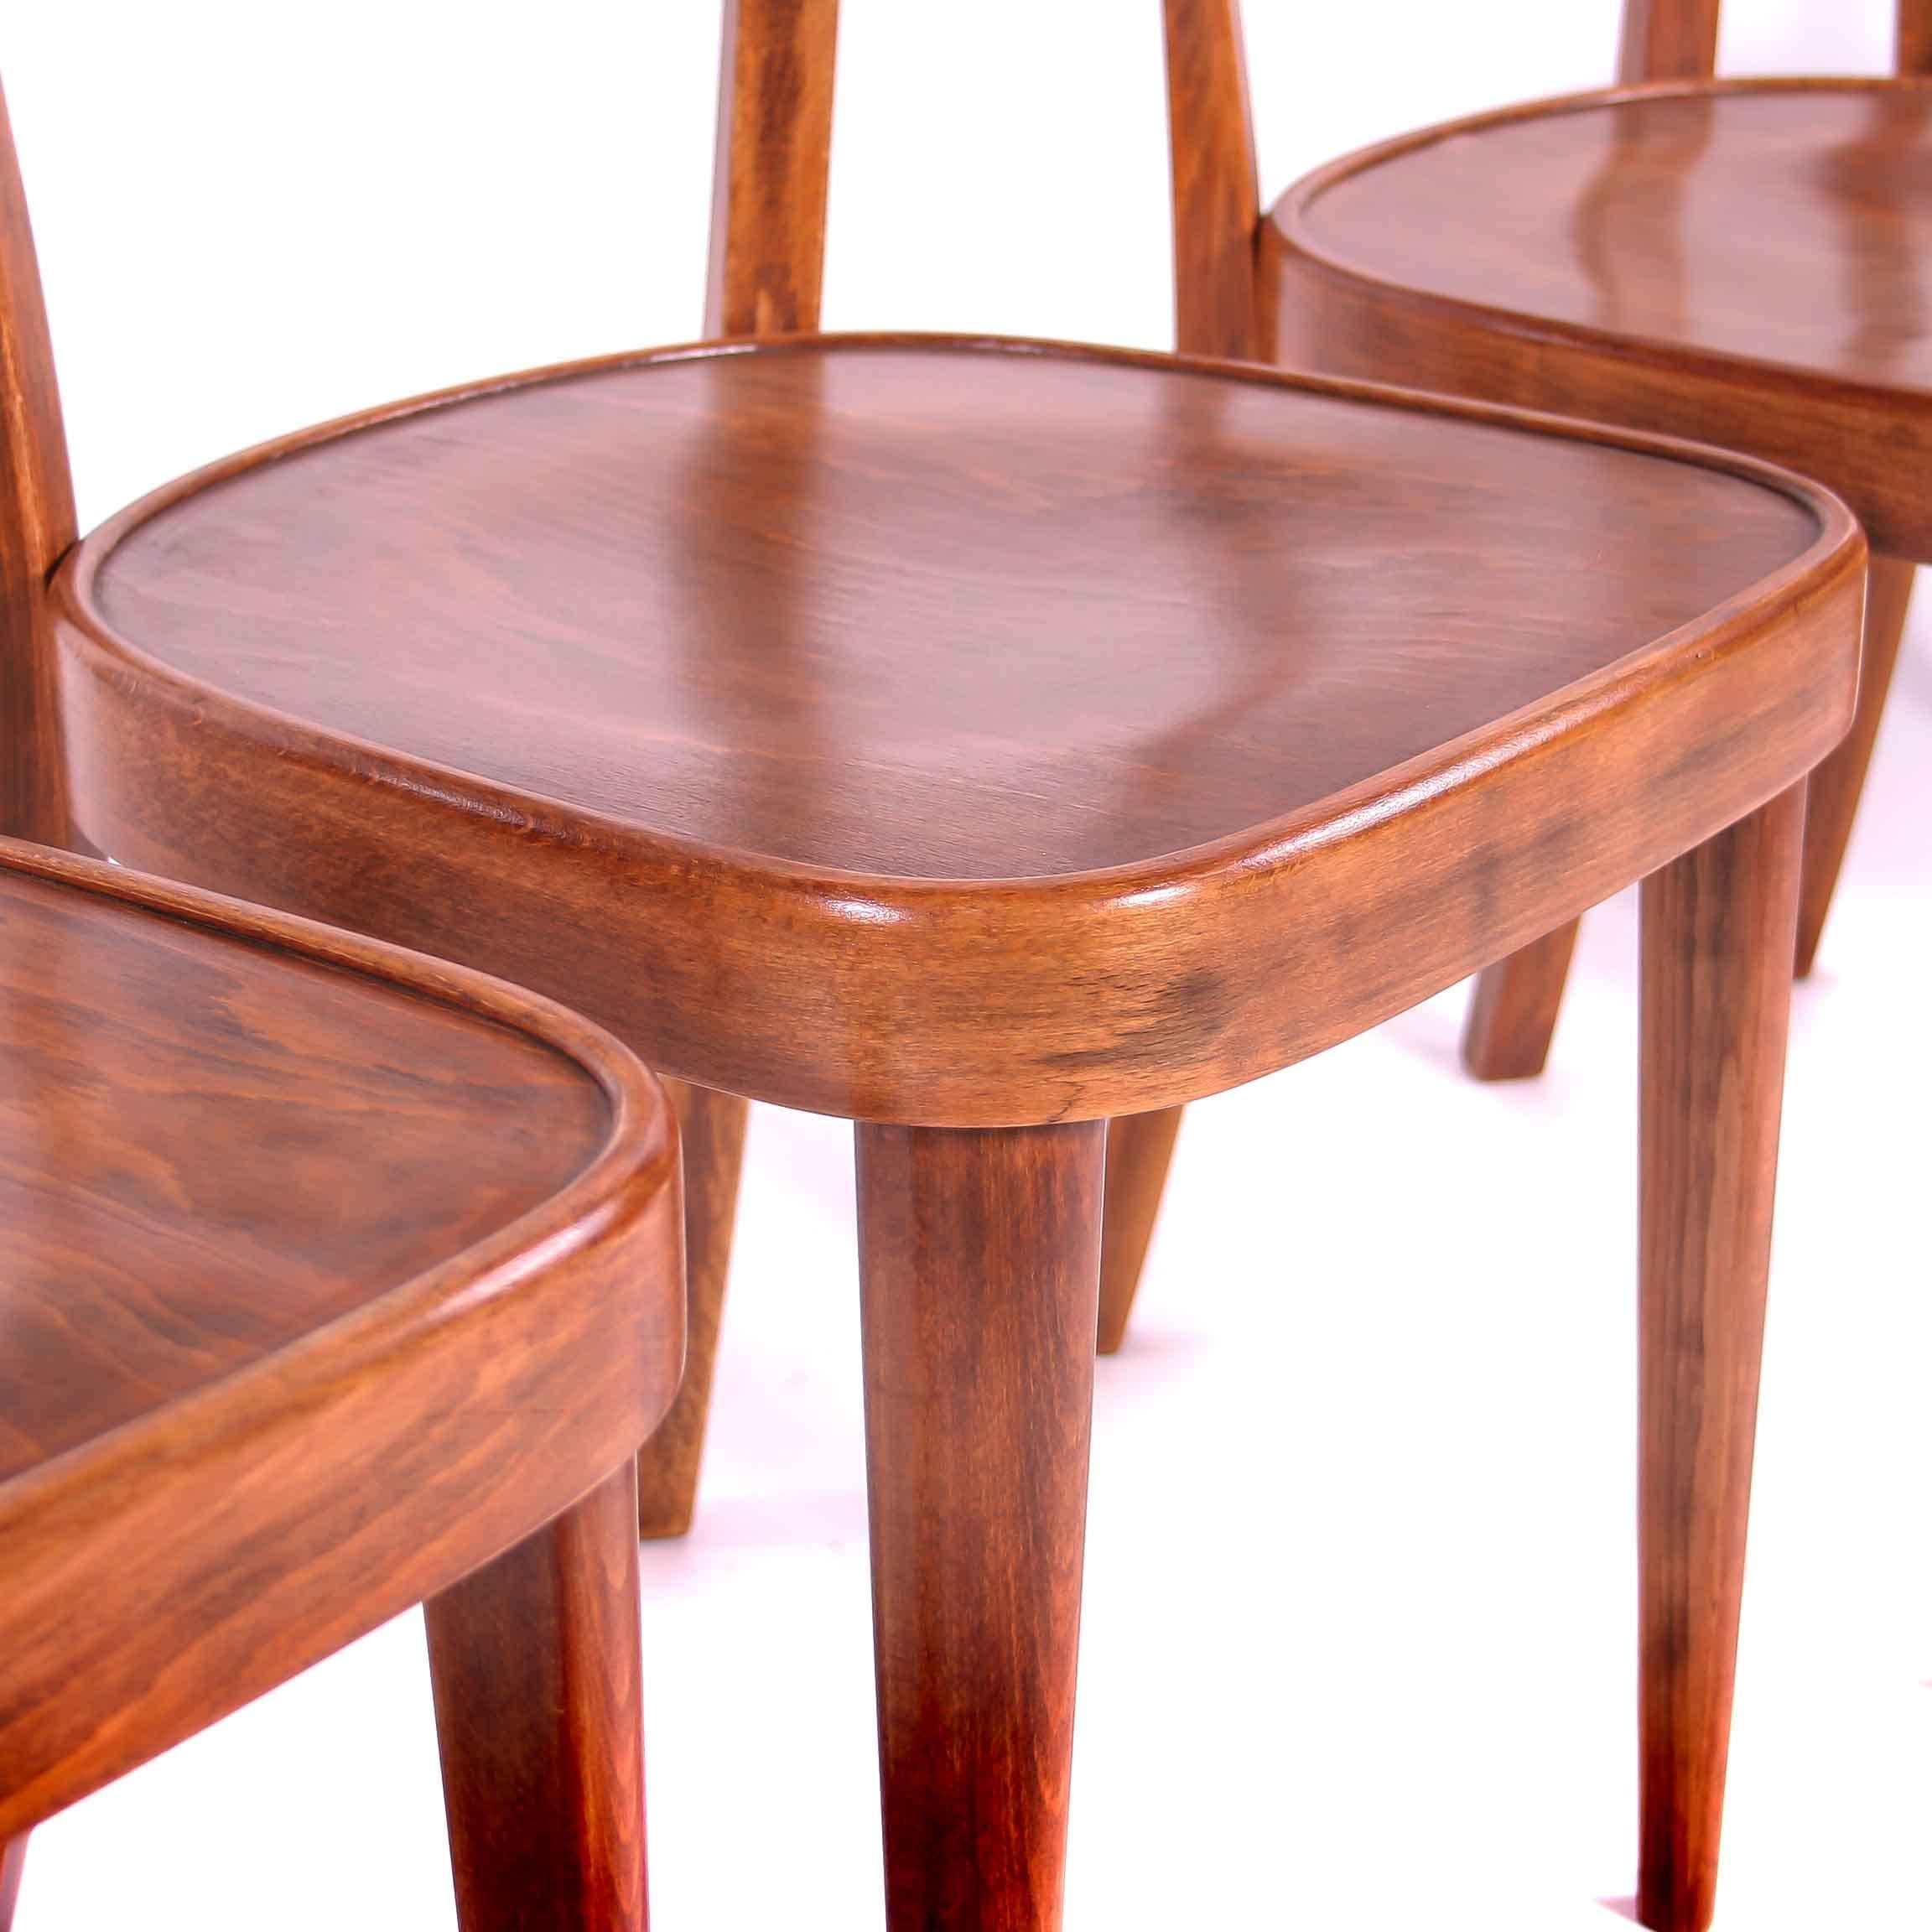 Czech Interwar Avantgard Design Dining Chairs by Jindrich Halabala 'Up Zavody' For Sale 7